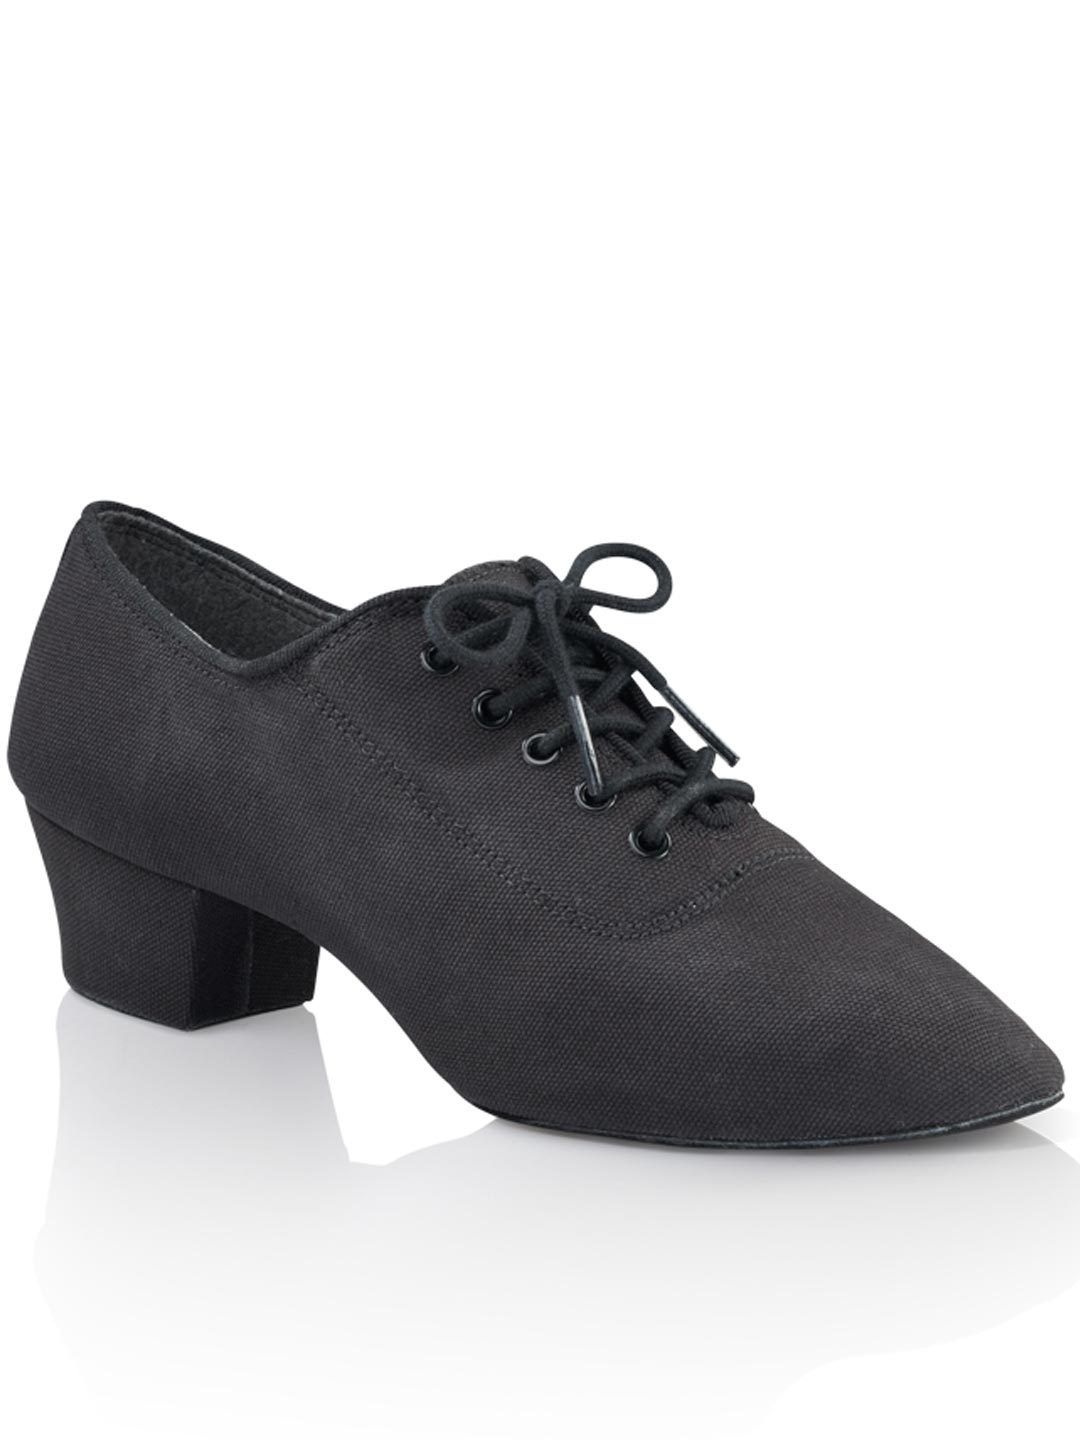 Amazon.com | Very Fine Women's Salsa Ballroom Tango Latin Dance Shoes Style  6033 Bundle with Plastic Dance Shoe Heel Protectors, Black Leather 4.5 M US  Heel 2.5 Inch | Ballet & Dance